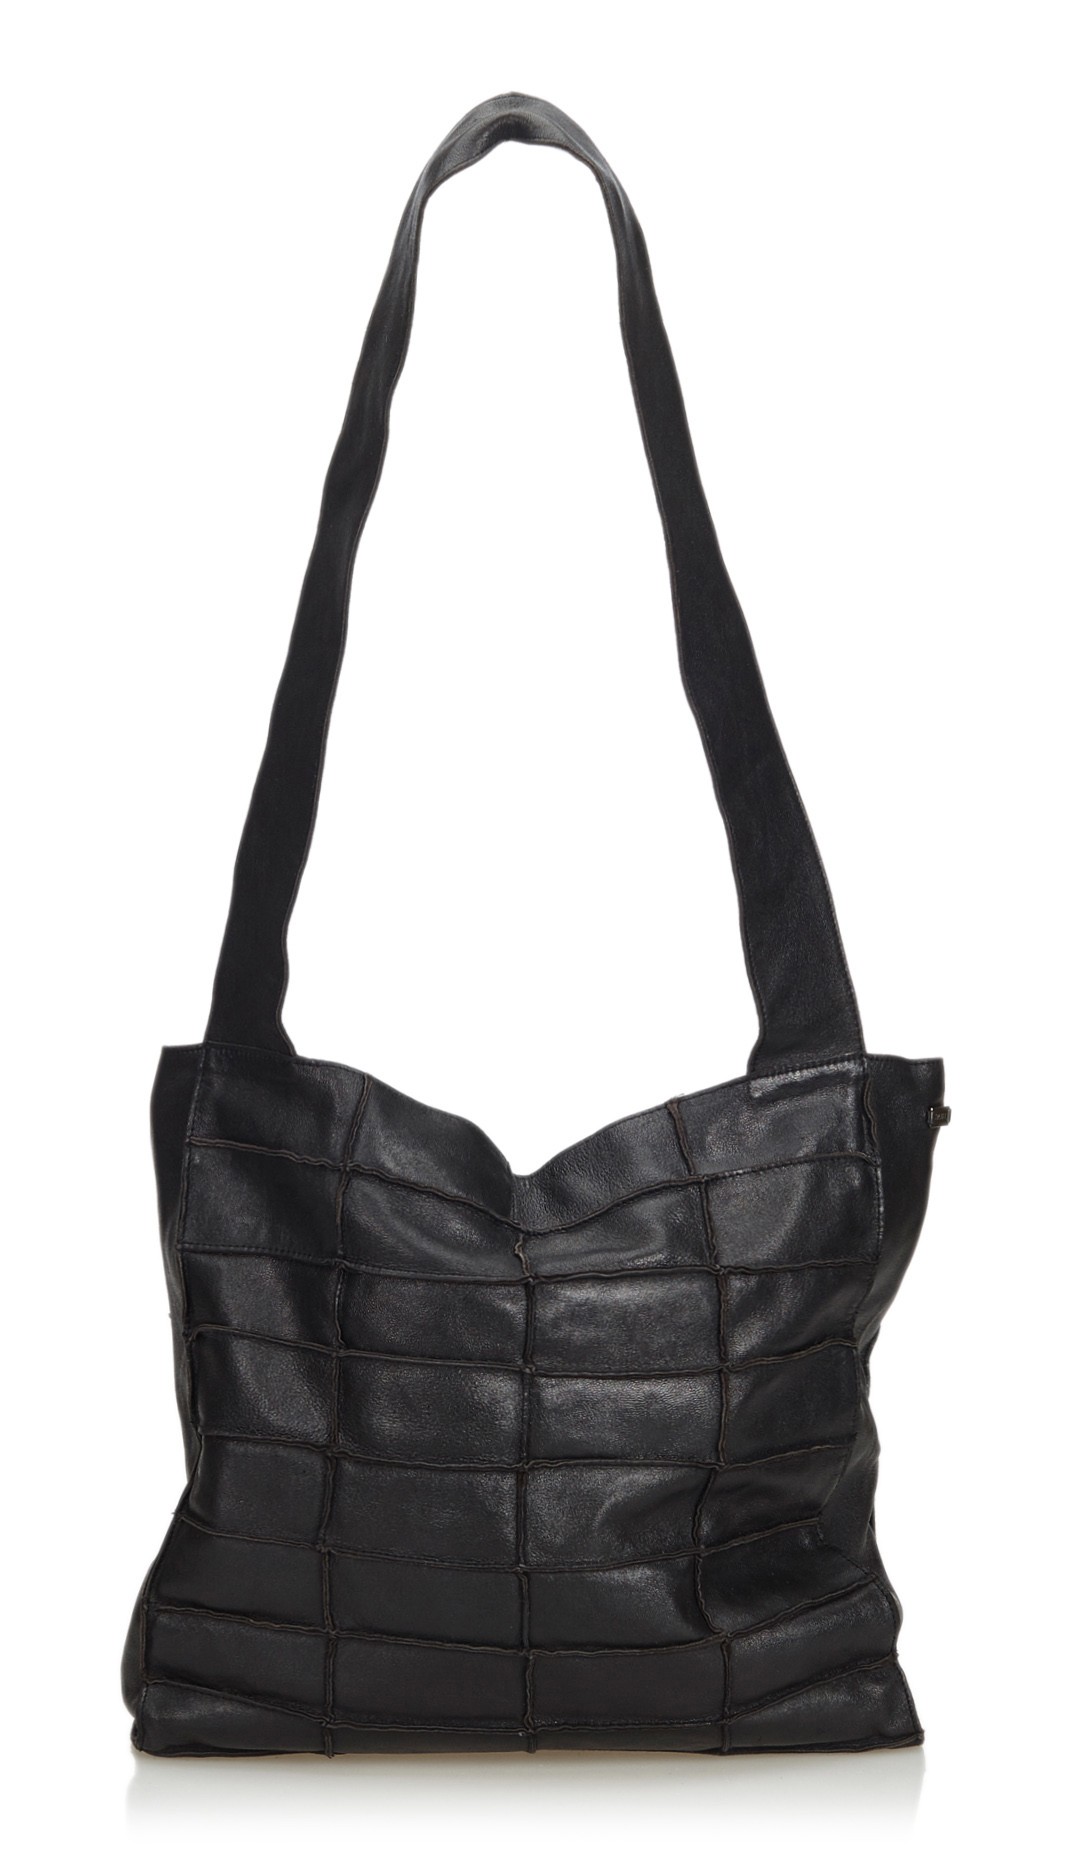 chanel style handbags